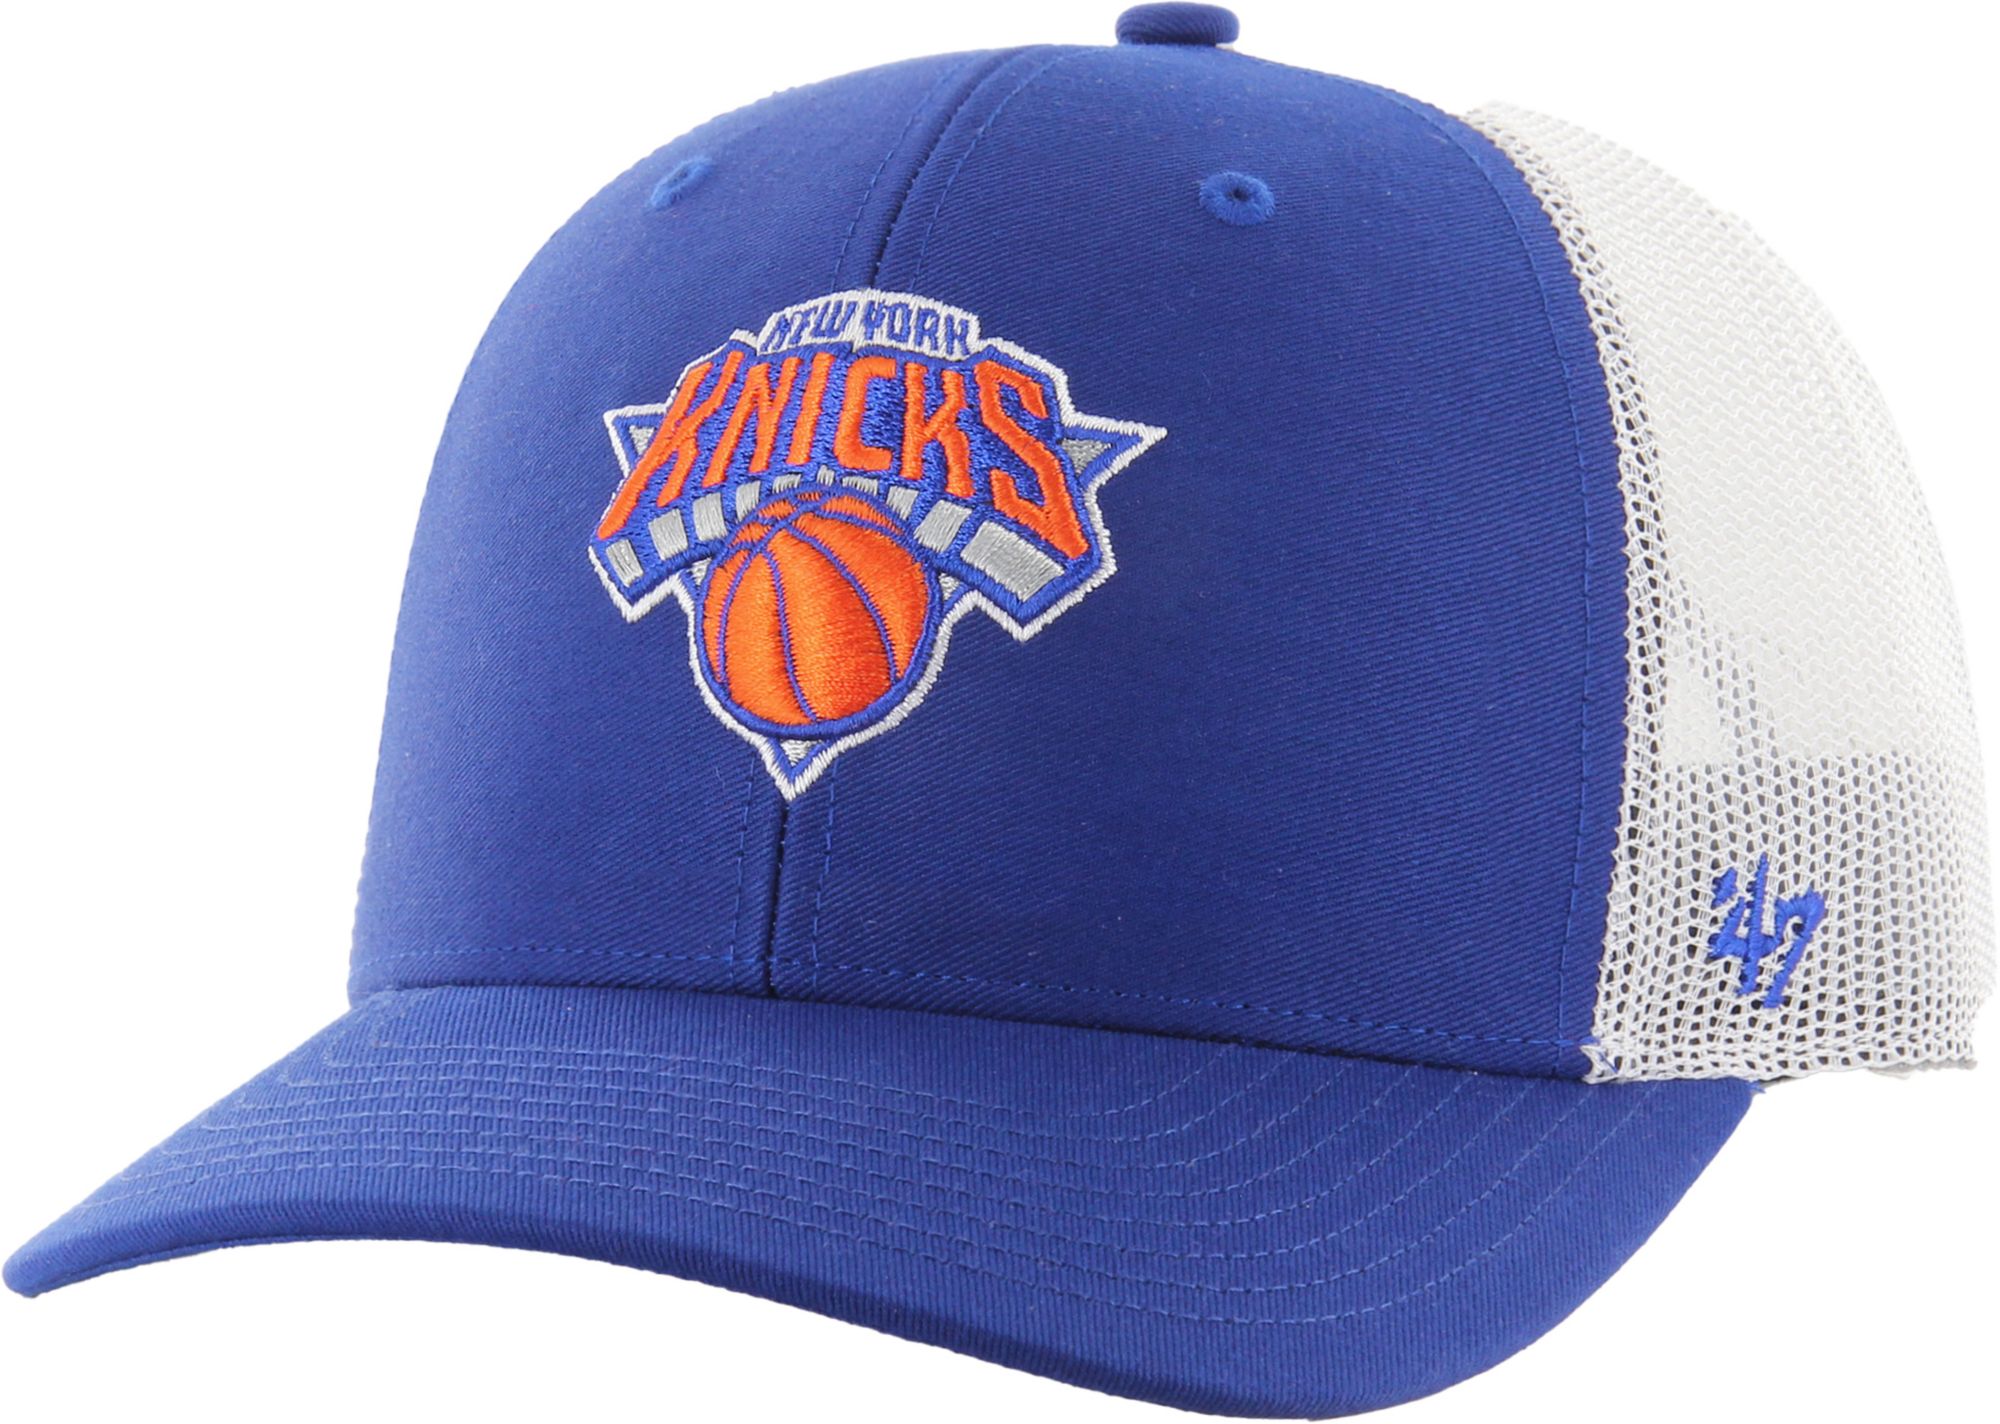 2019-23 New York Knicks Randle #30 Nike Swingman Home Jersey (S)